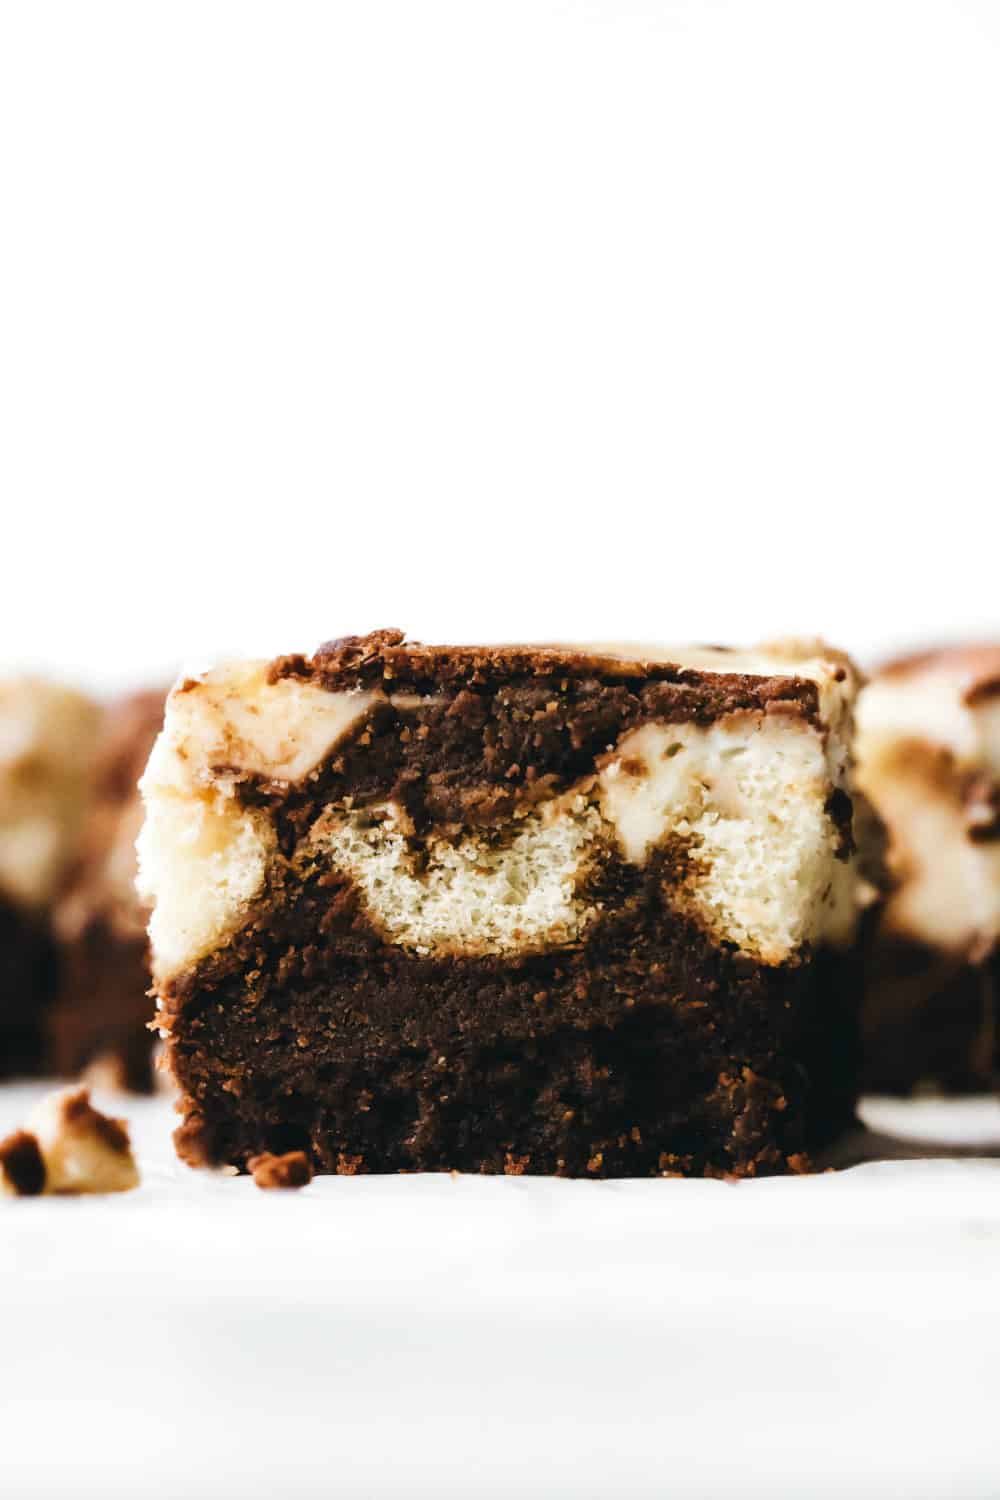 Close-up view of sliced tiramisu brownie showing brownie layer, ladyfinger layer and mascarpone layer.